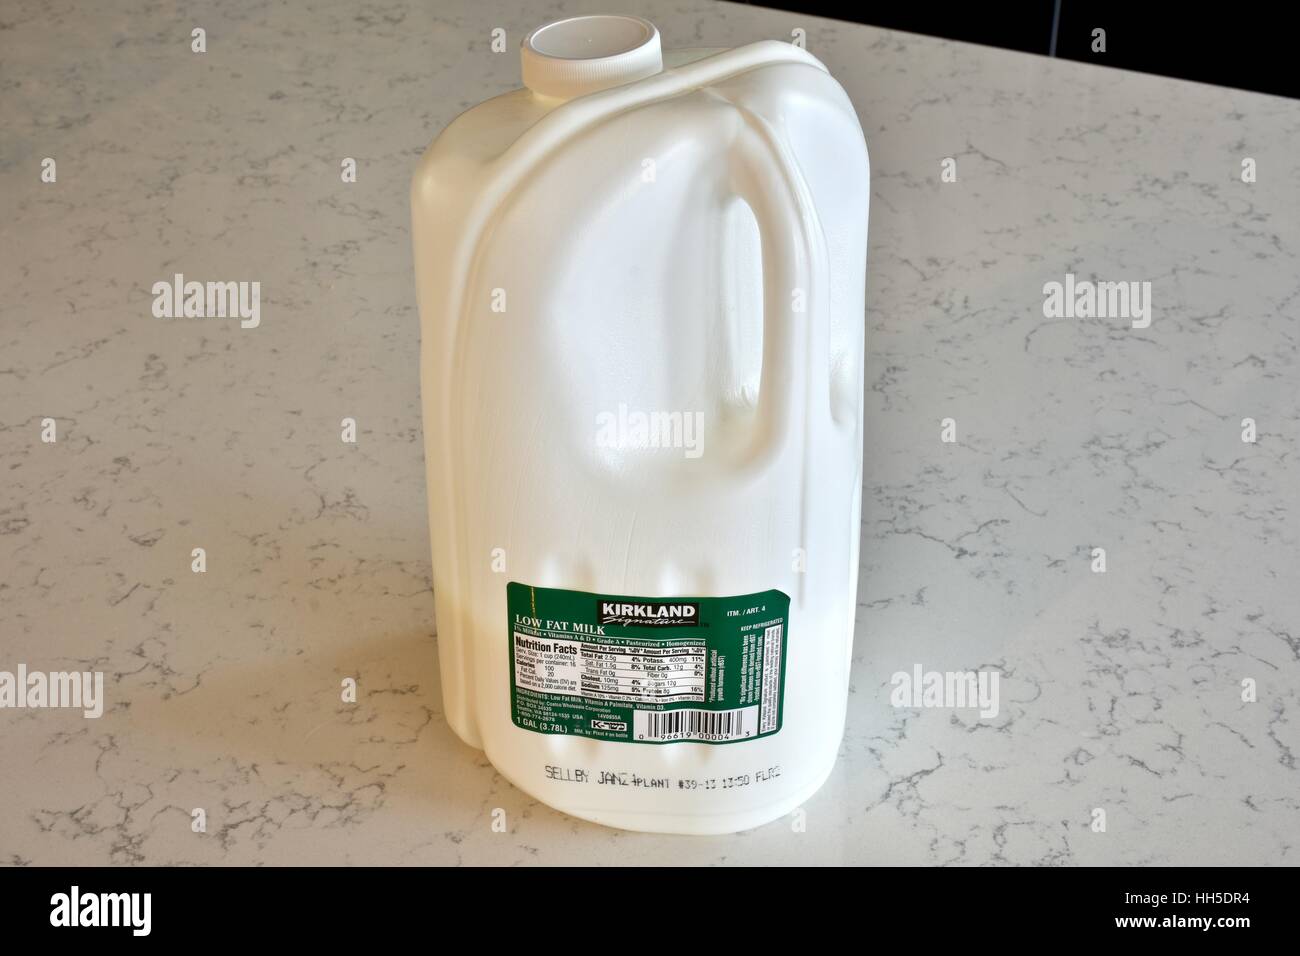 https://c8.alamy.com/comp/HH5DR4/a-kirkland-brand-gallon-of-milk-on-a-white-marble-surface-HH5DR4.jpg